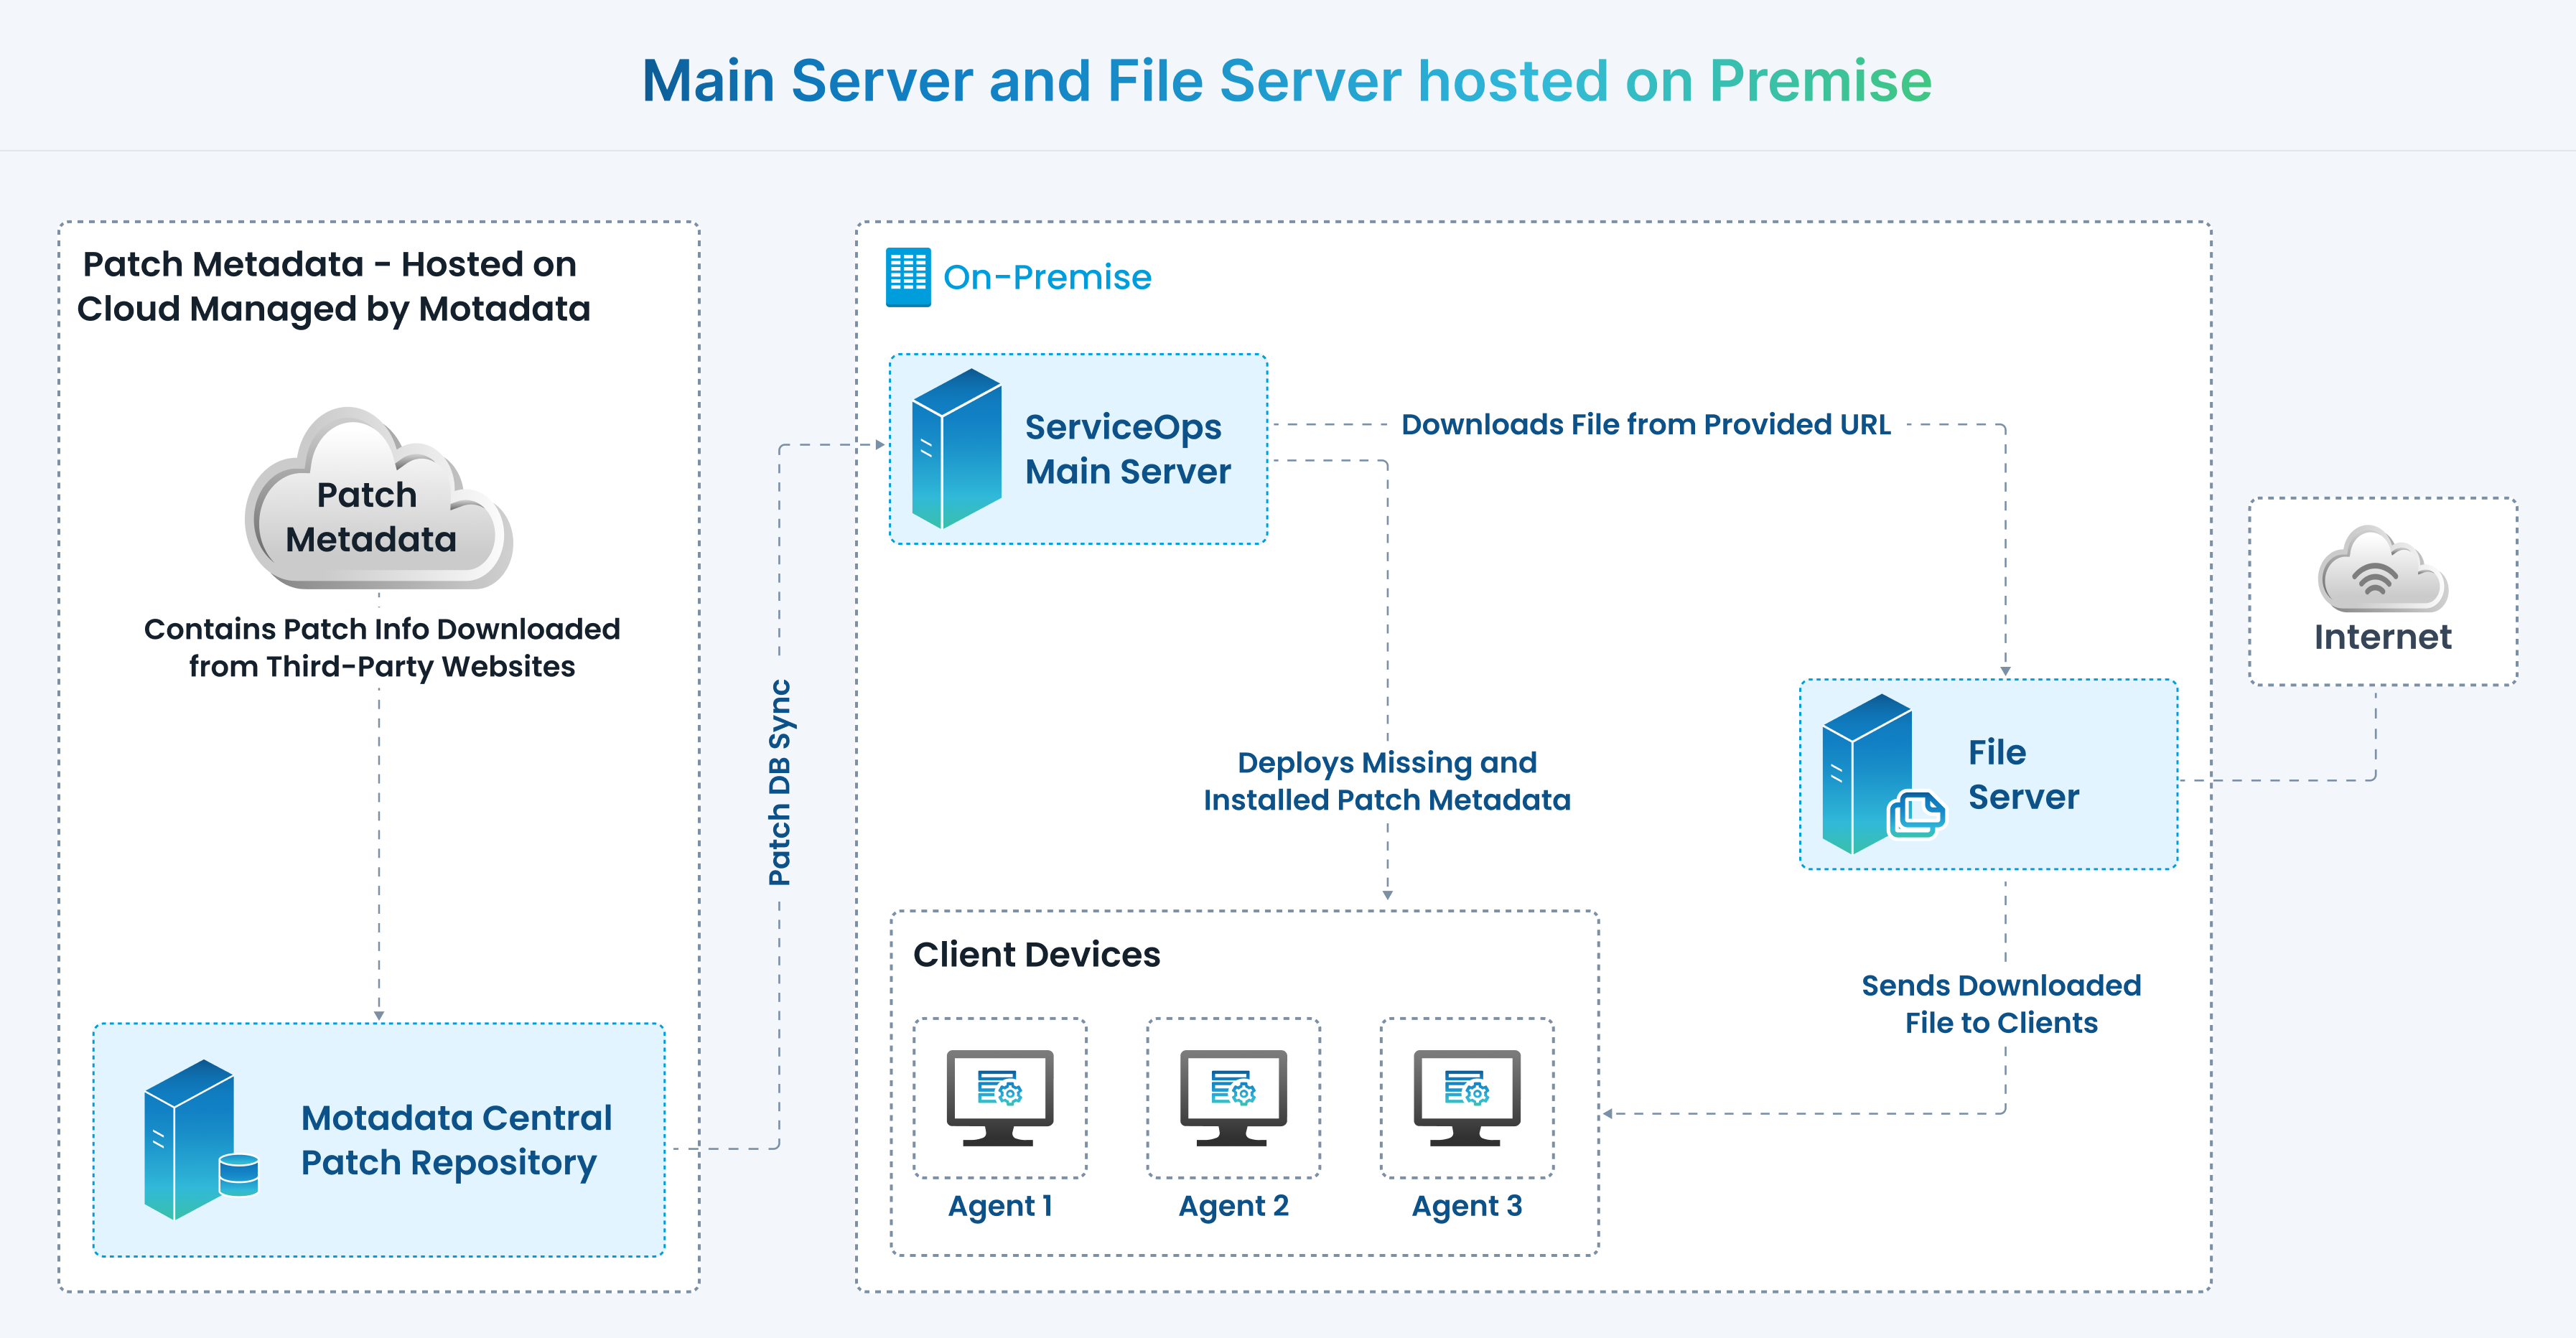 Main Server and File Server on Premise